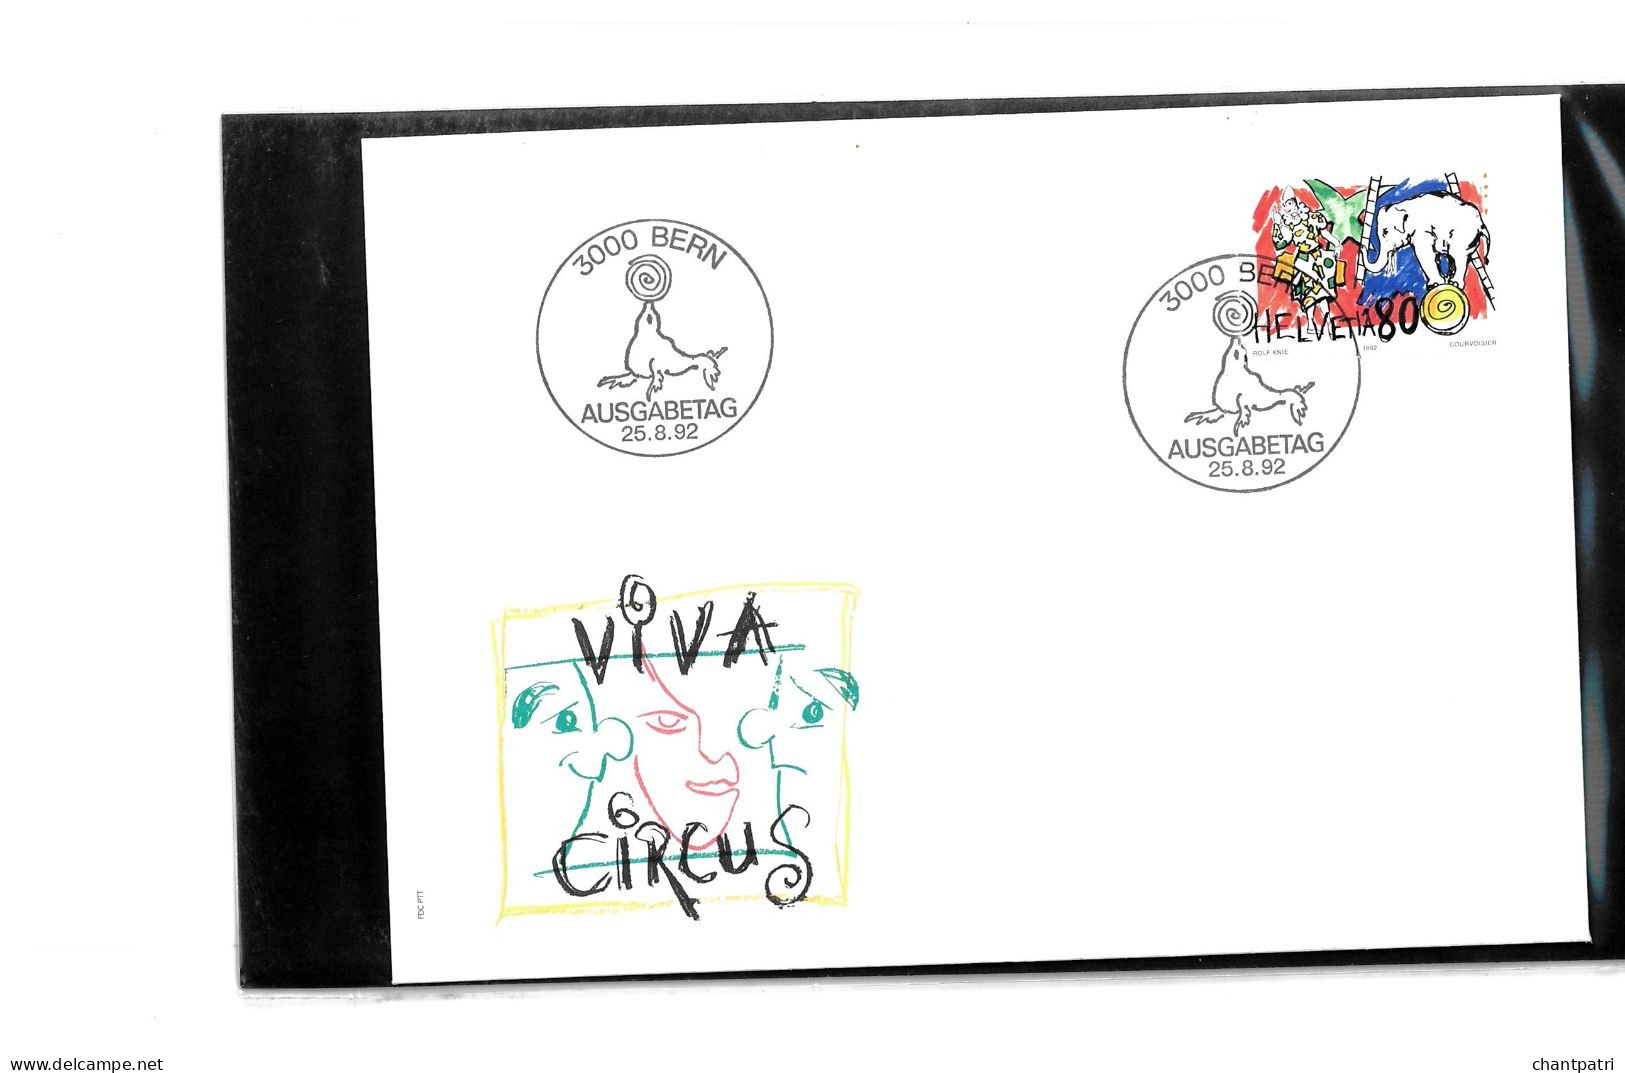 3000 Bern - Viva Circus - Ausgabetag - 25 08 1992 - Beli FDC 014 - Briefe U. Dokumente